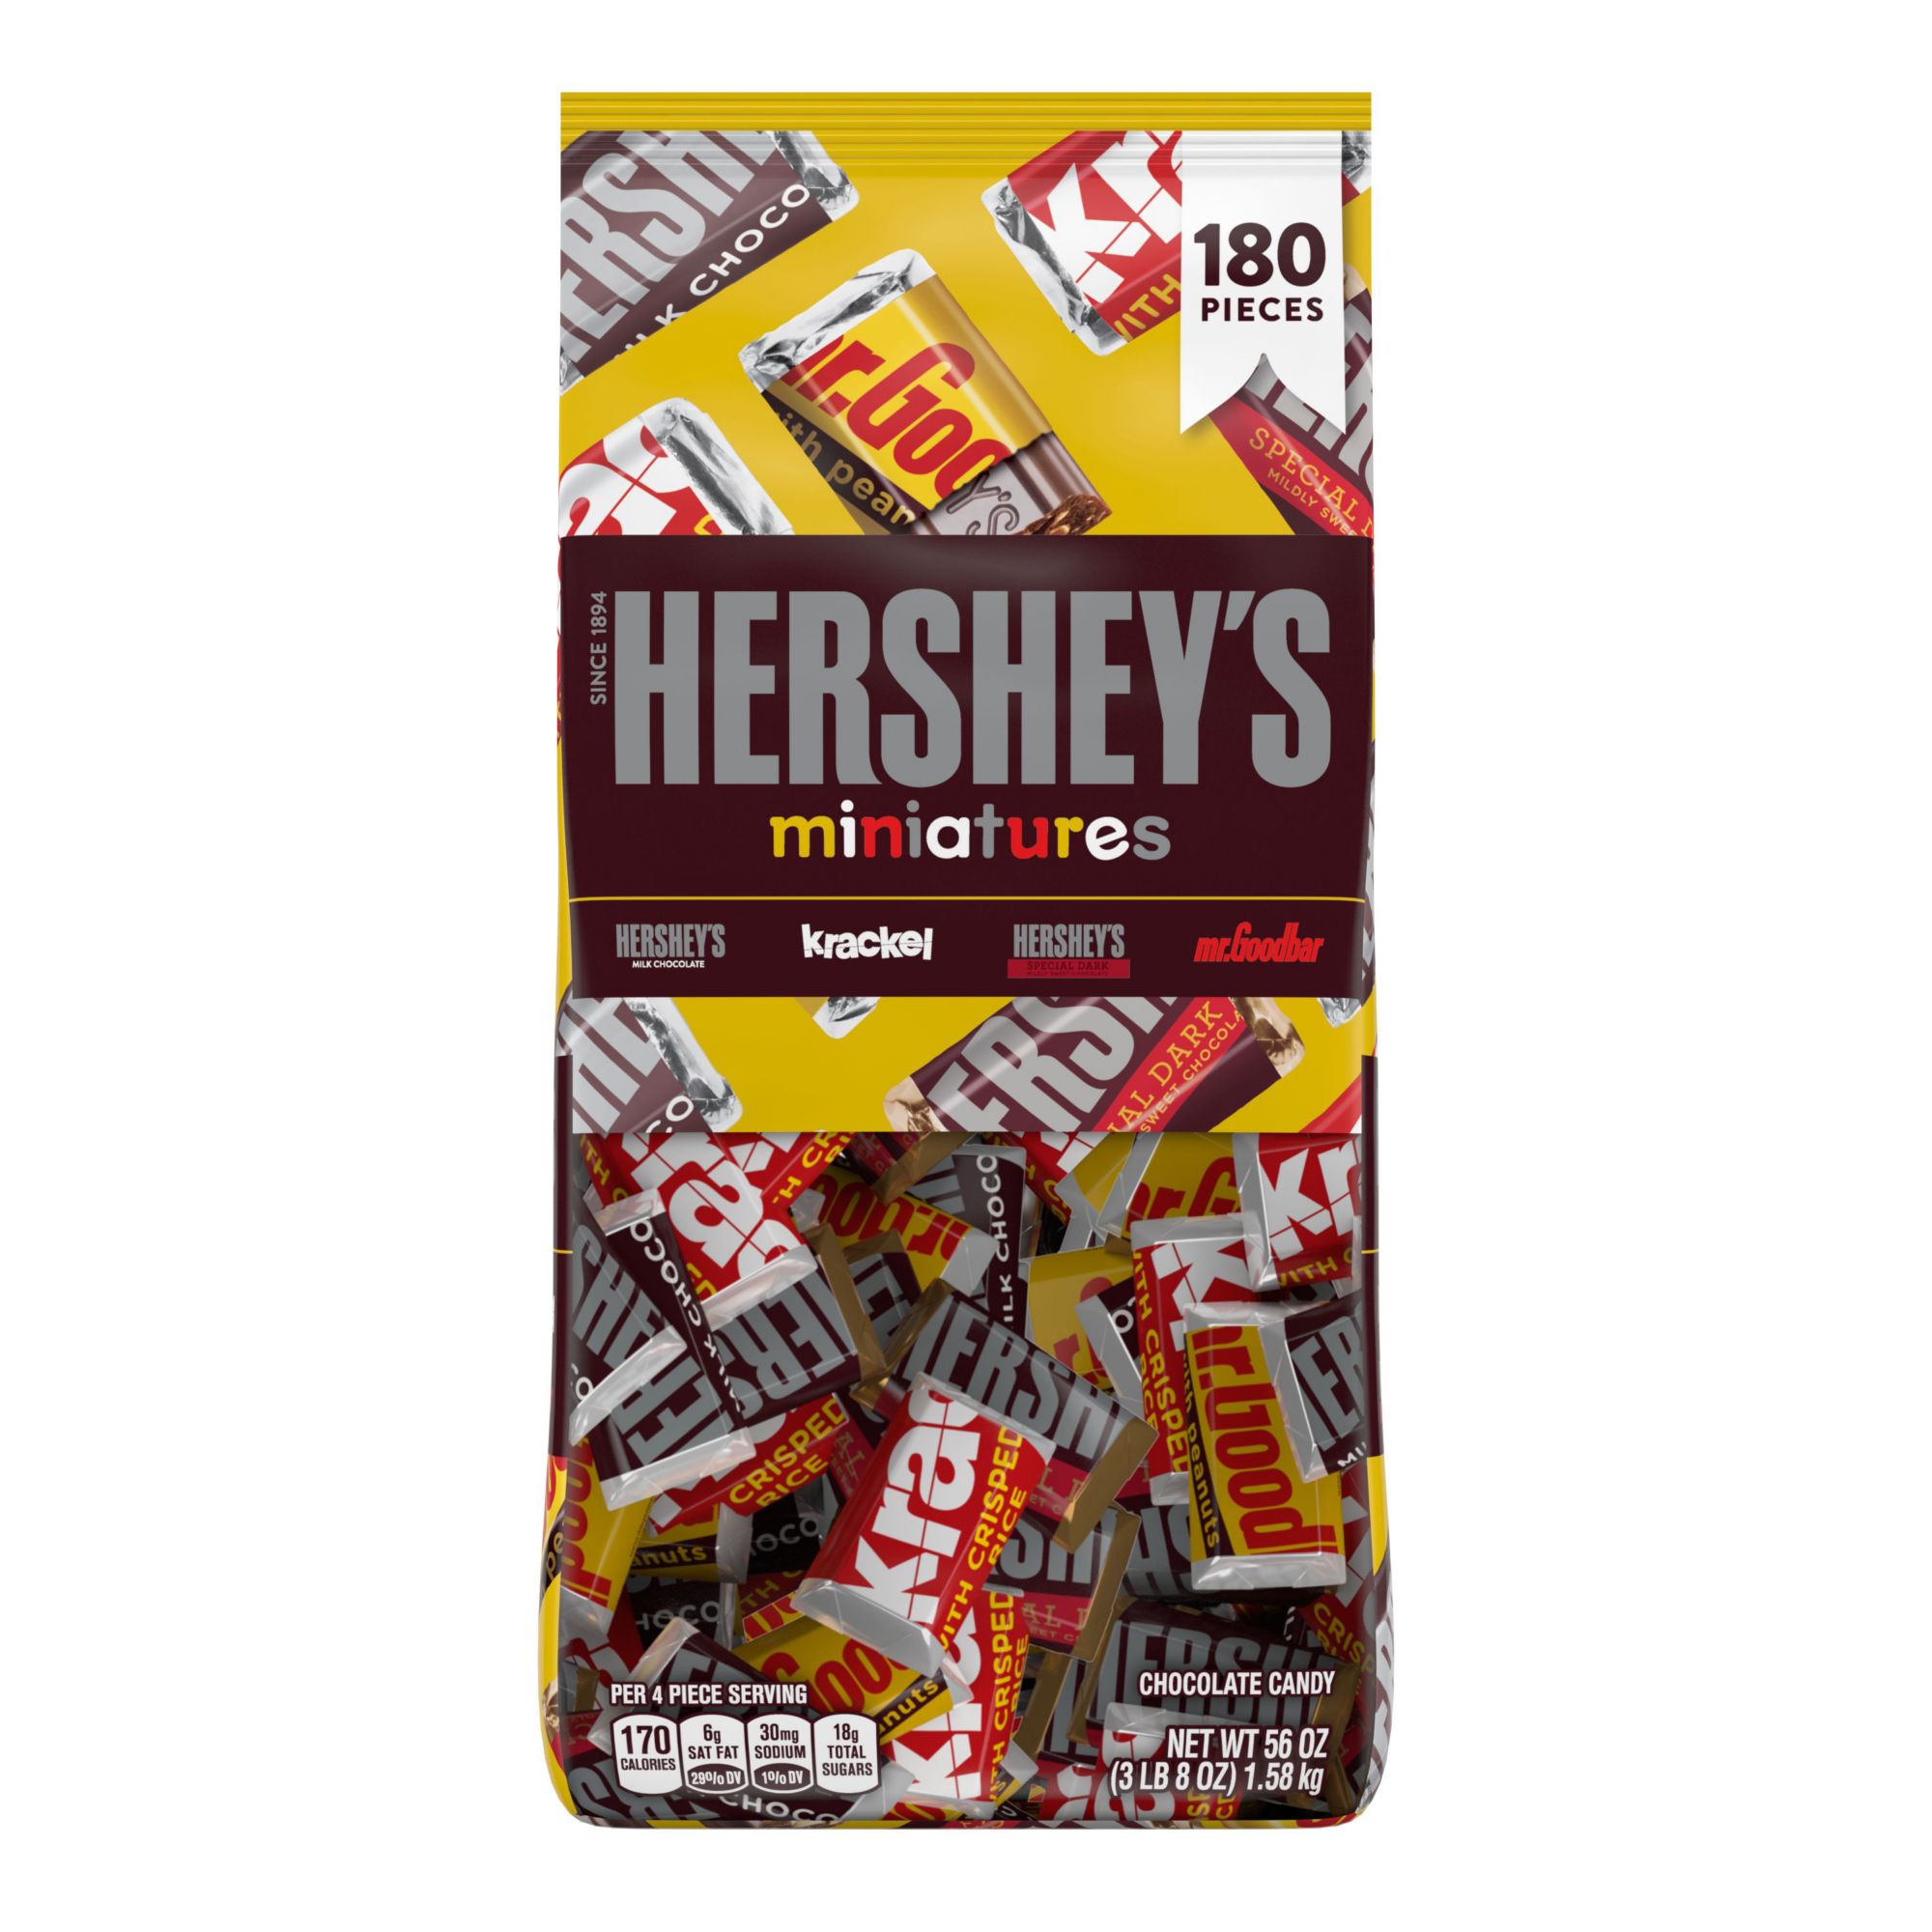 Hershey's Milk Chocolate Snack Size Candy Bars: 40-Piece Bag